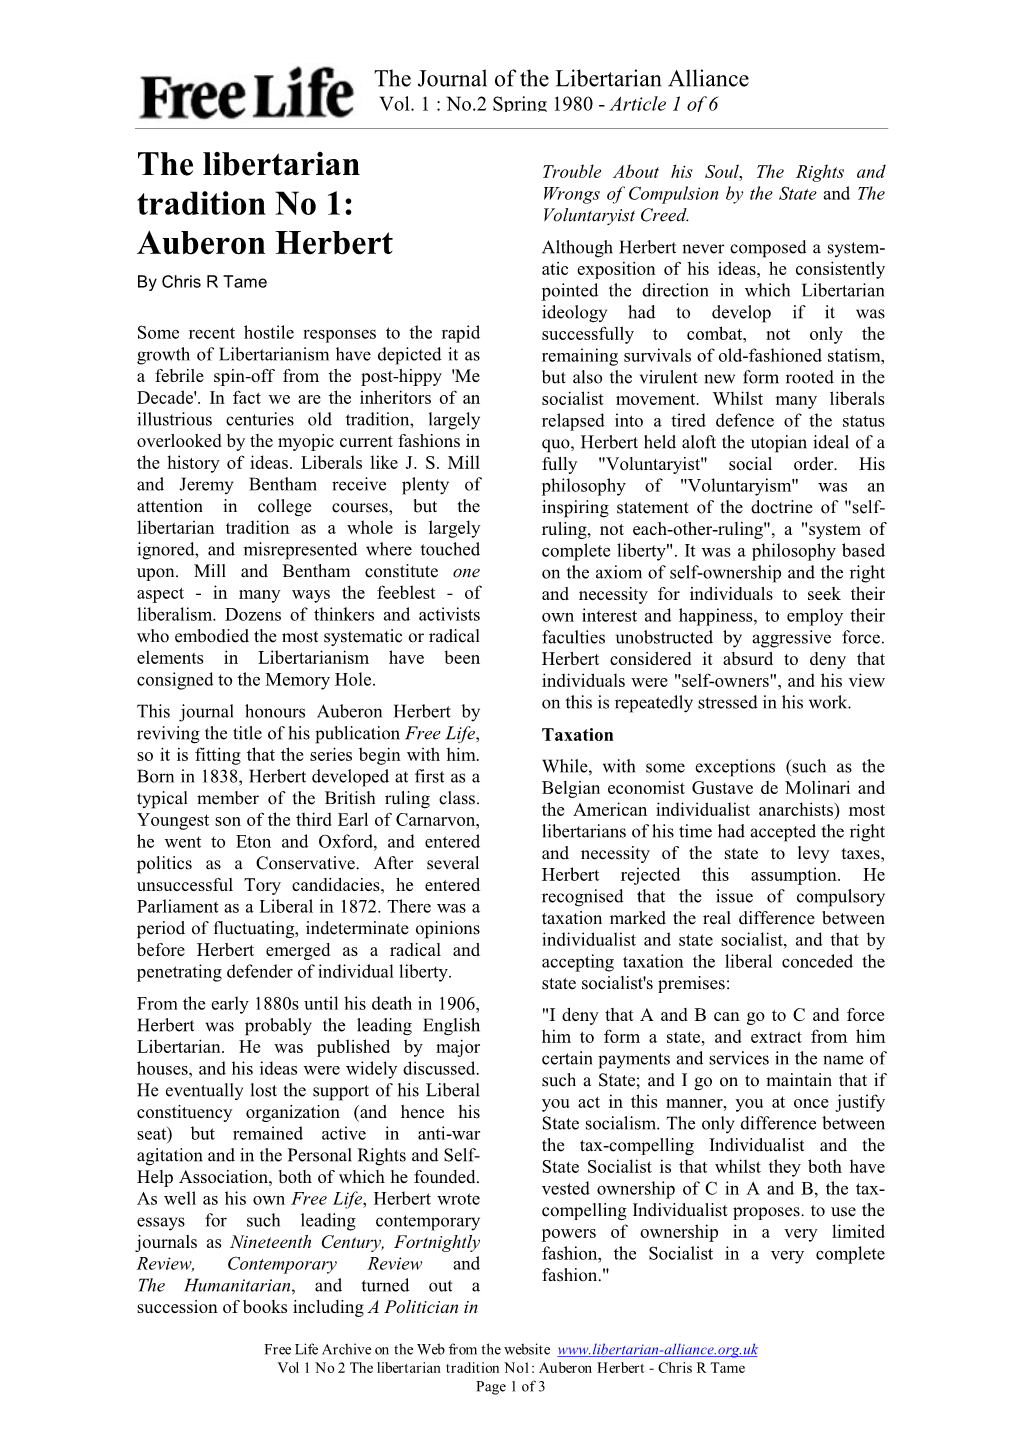 The Libertarian Tradition No 1: Auberon Herbert